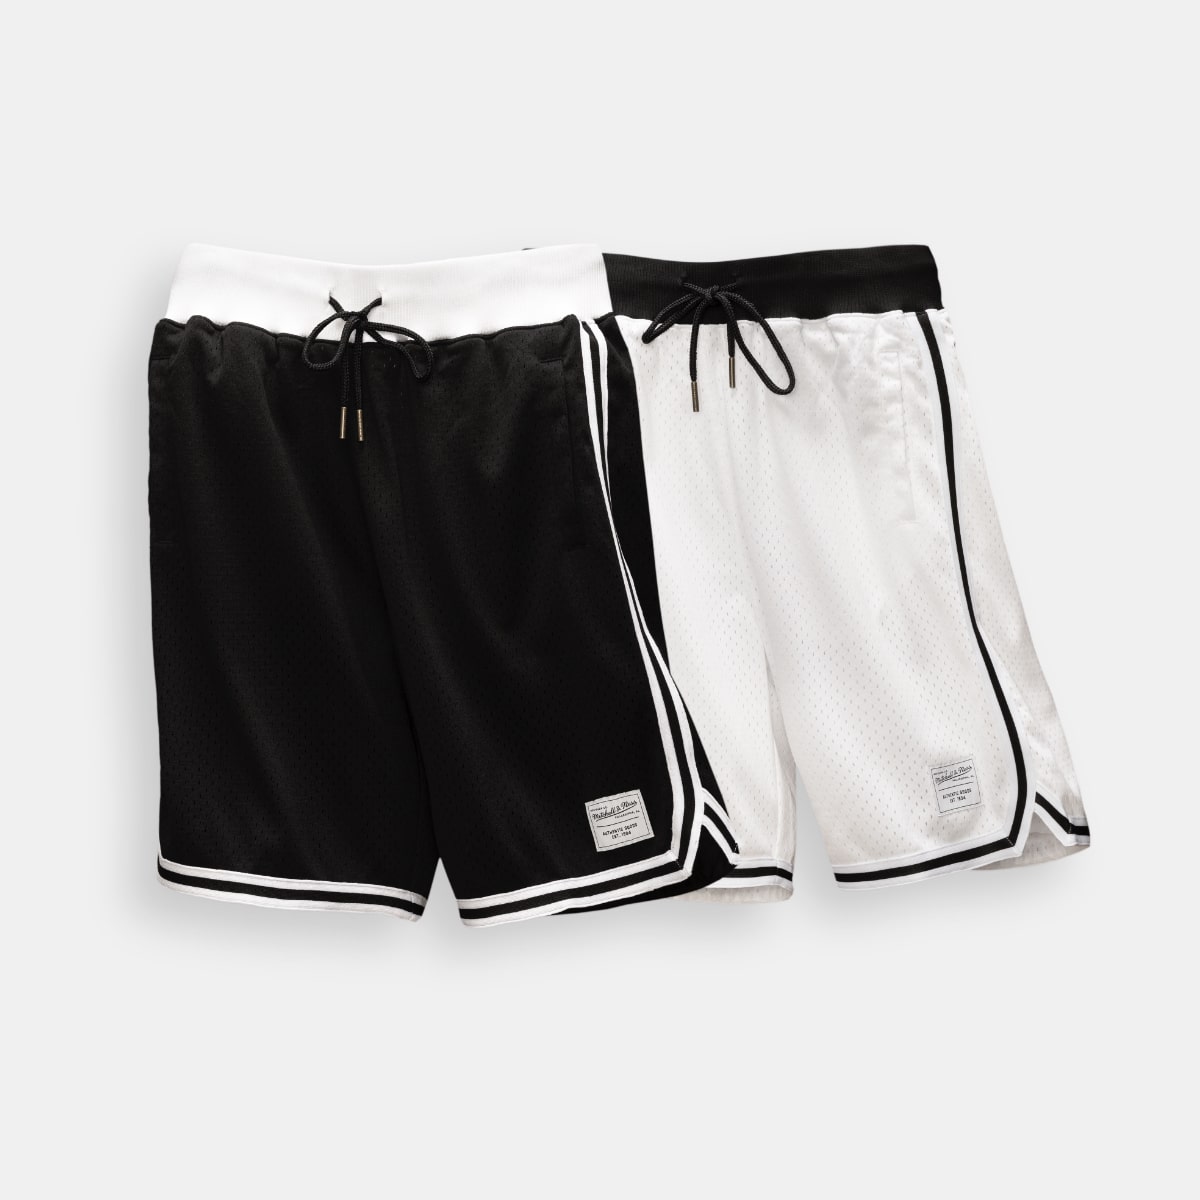 M&N Branded Shorts